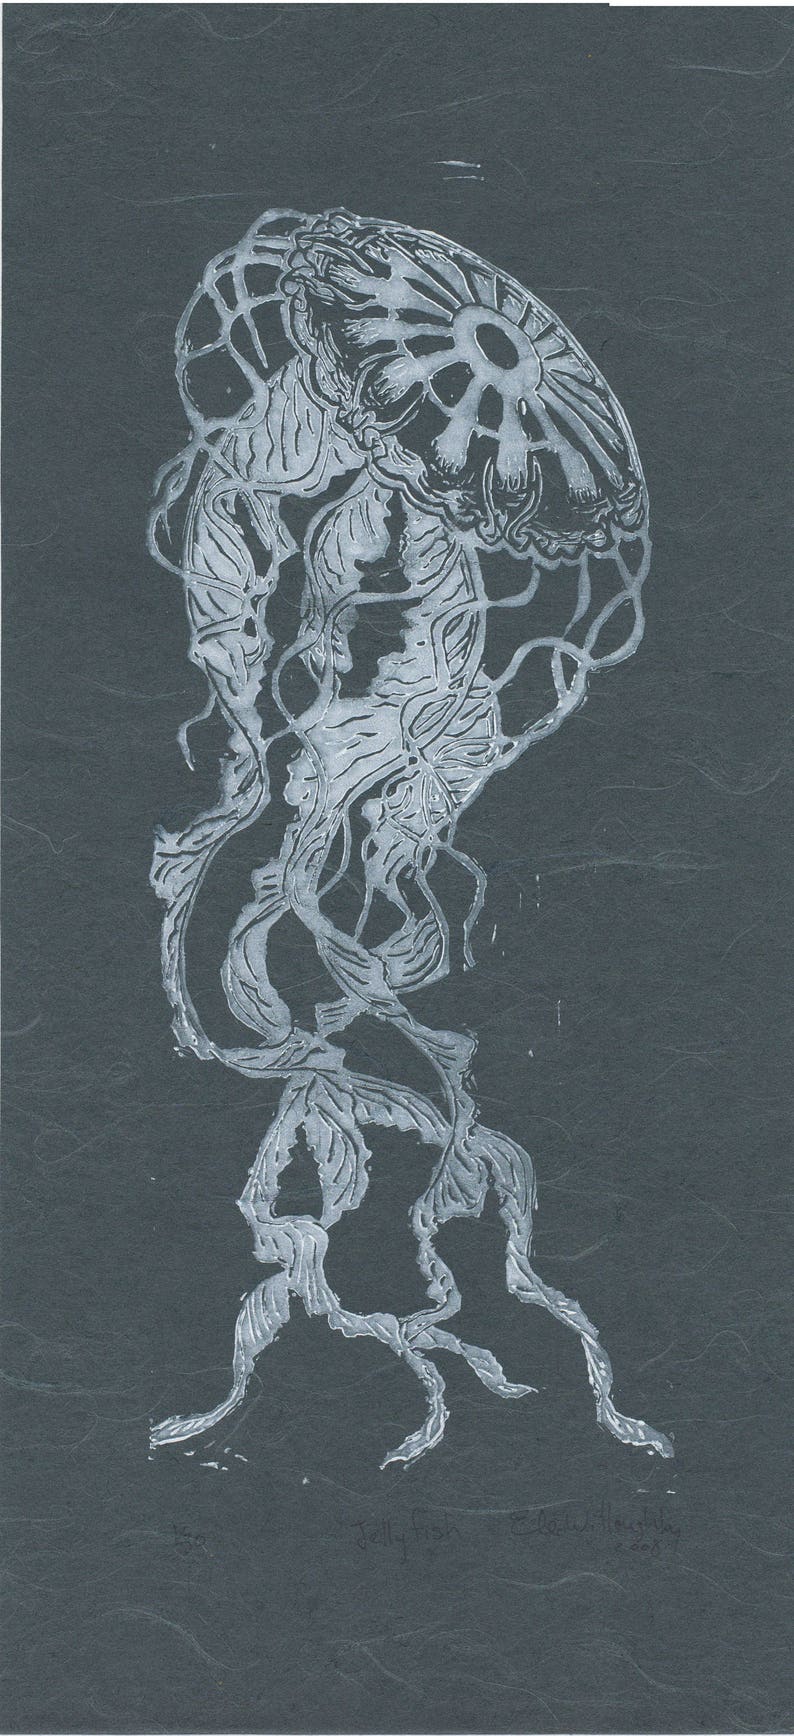 Immortal Jellyfish: I Wanna Live Forever Handprinted Lino Block Print of Turritopsis Dohrnii Medusa Called Immortal Jellyfish, Linocut image 7